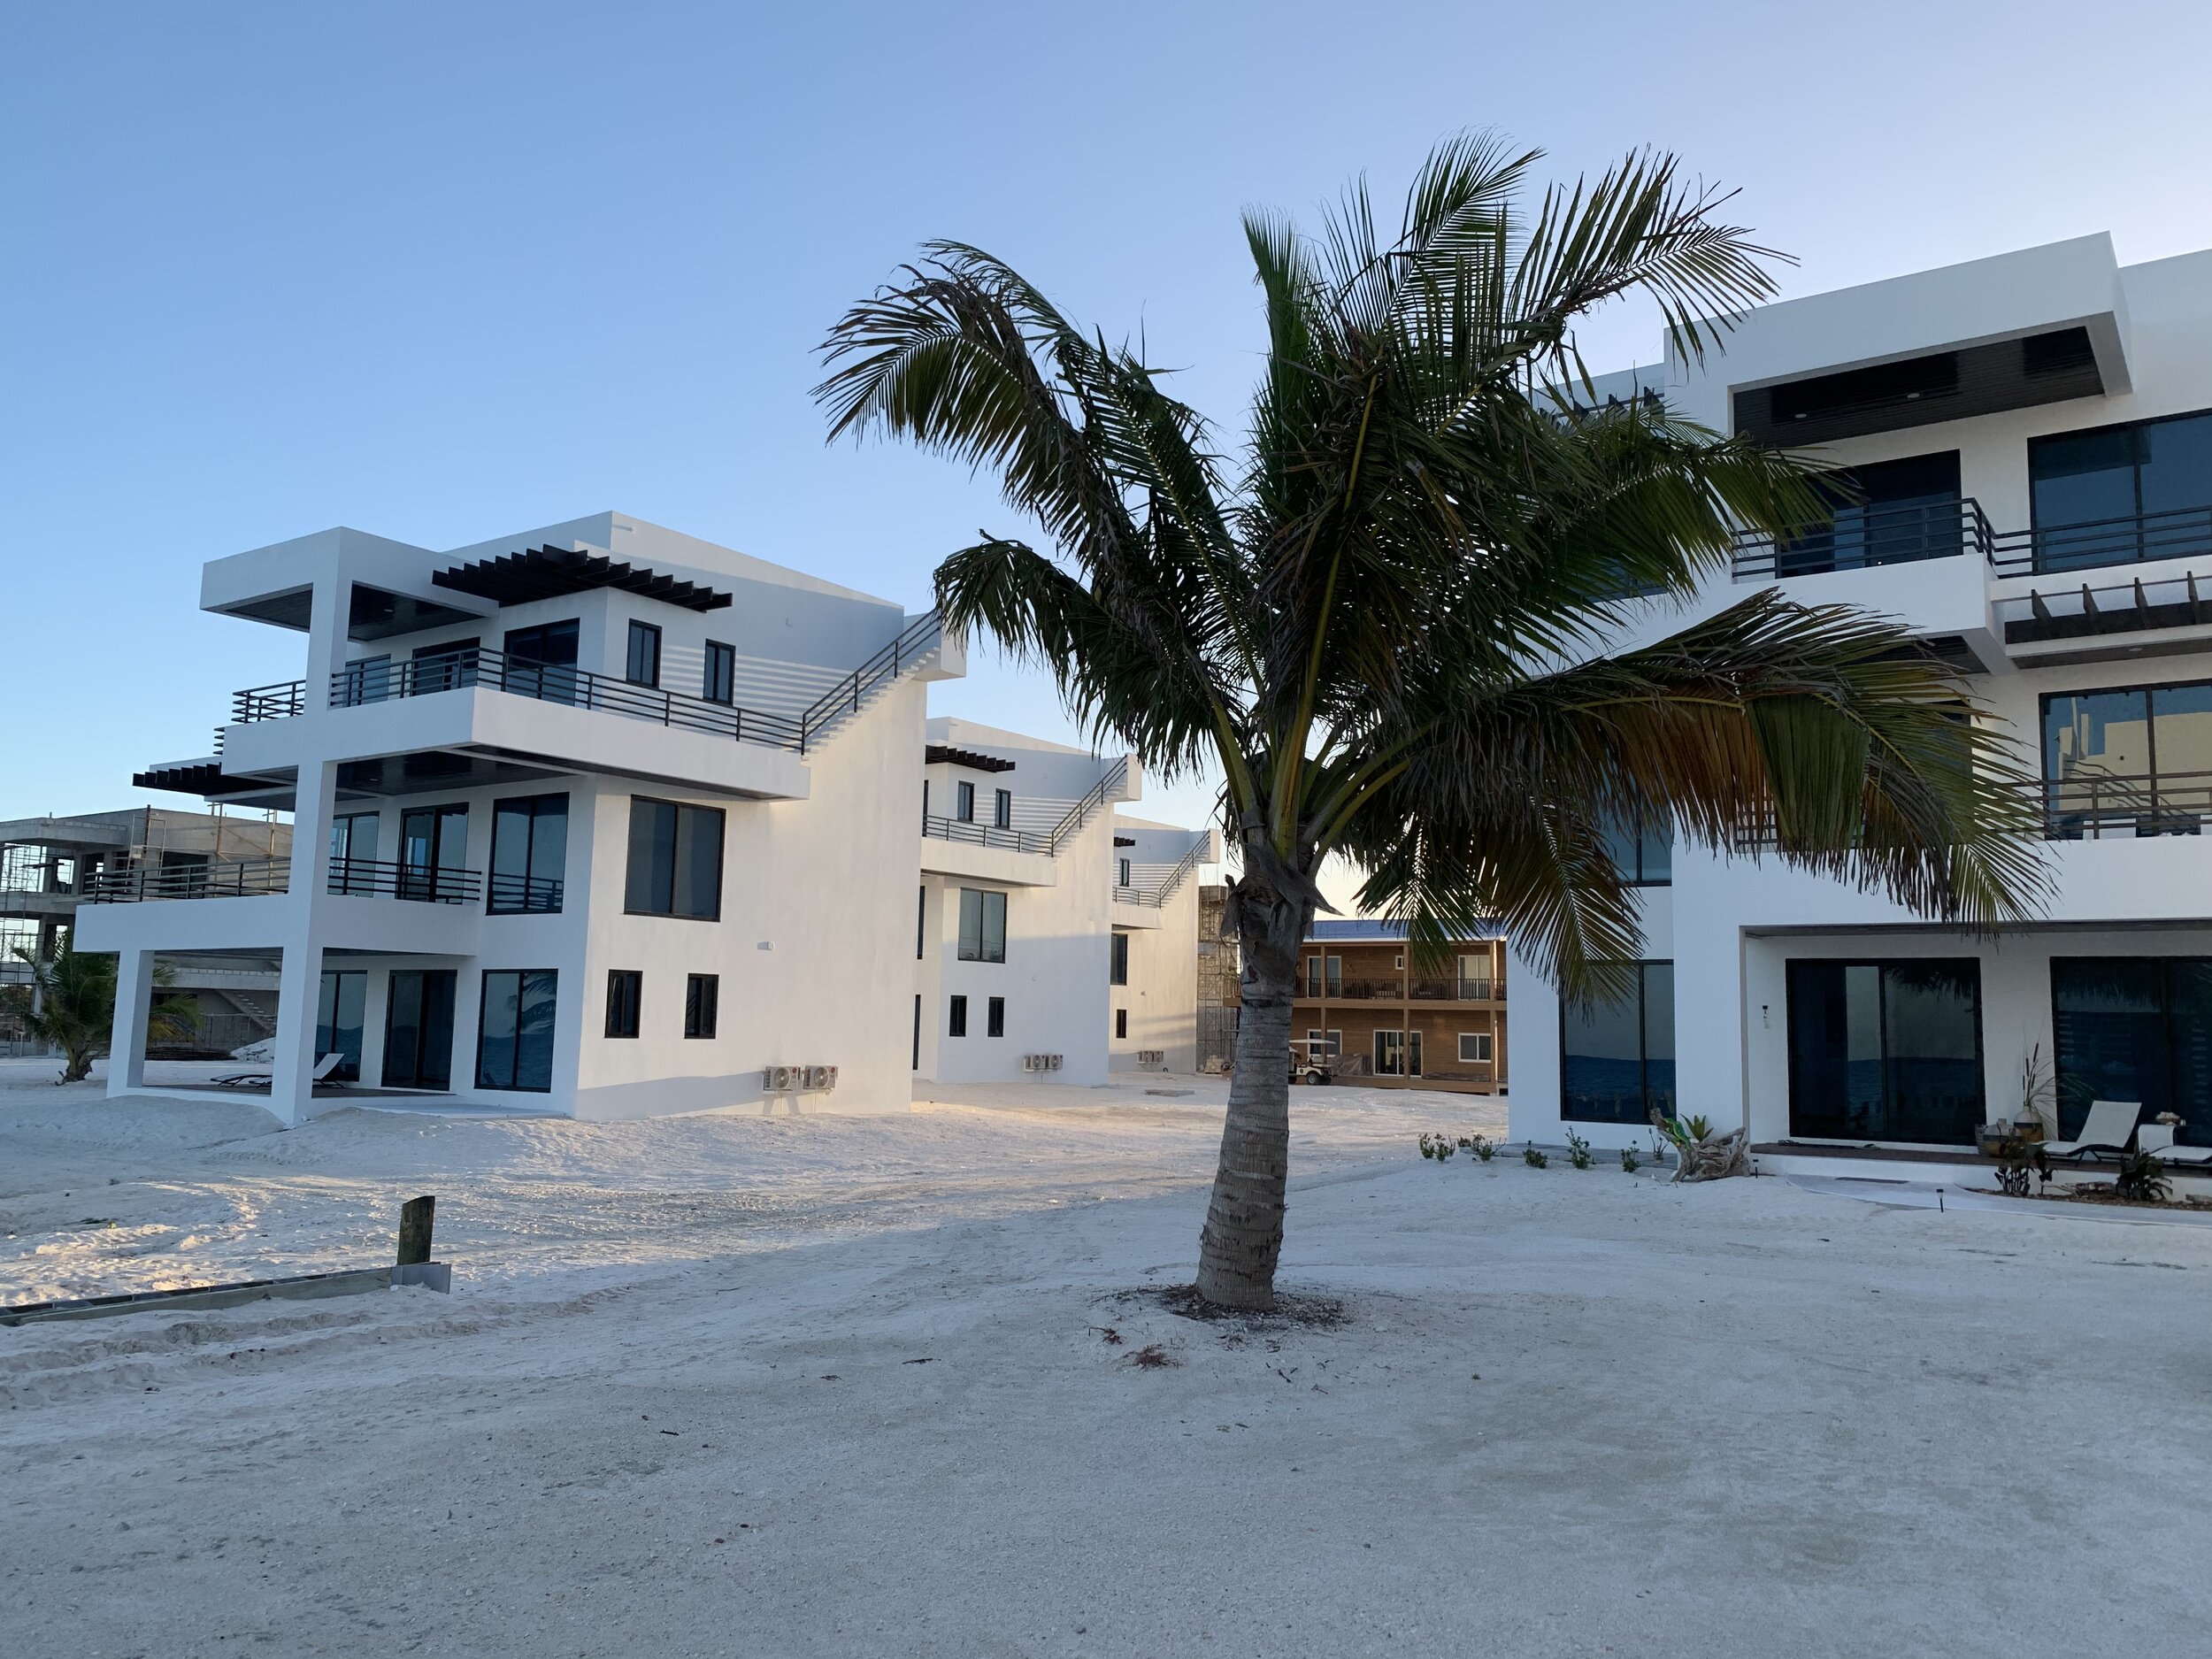 Caye Caulker Island - Real Estate Investments